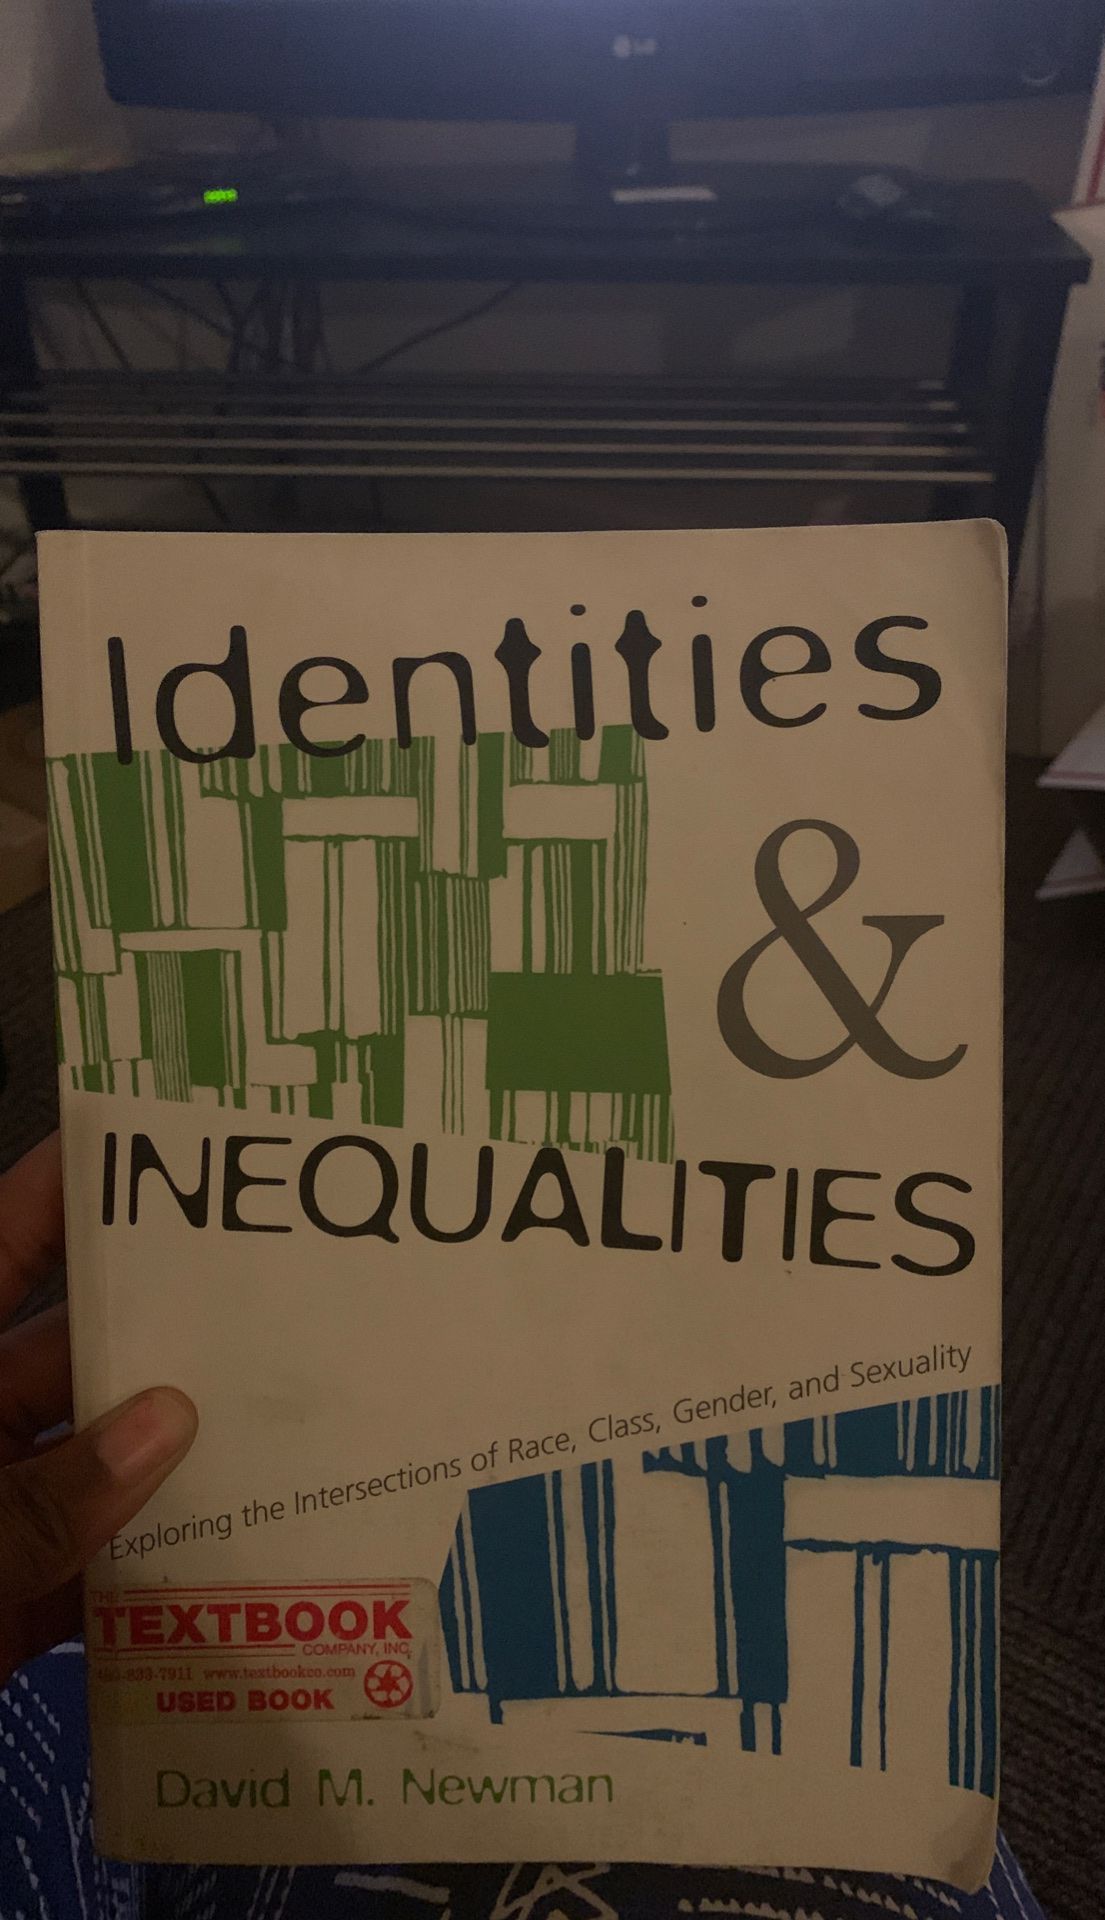 Free Identities & inequalities book